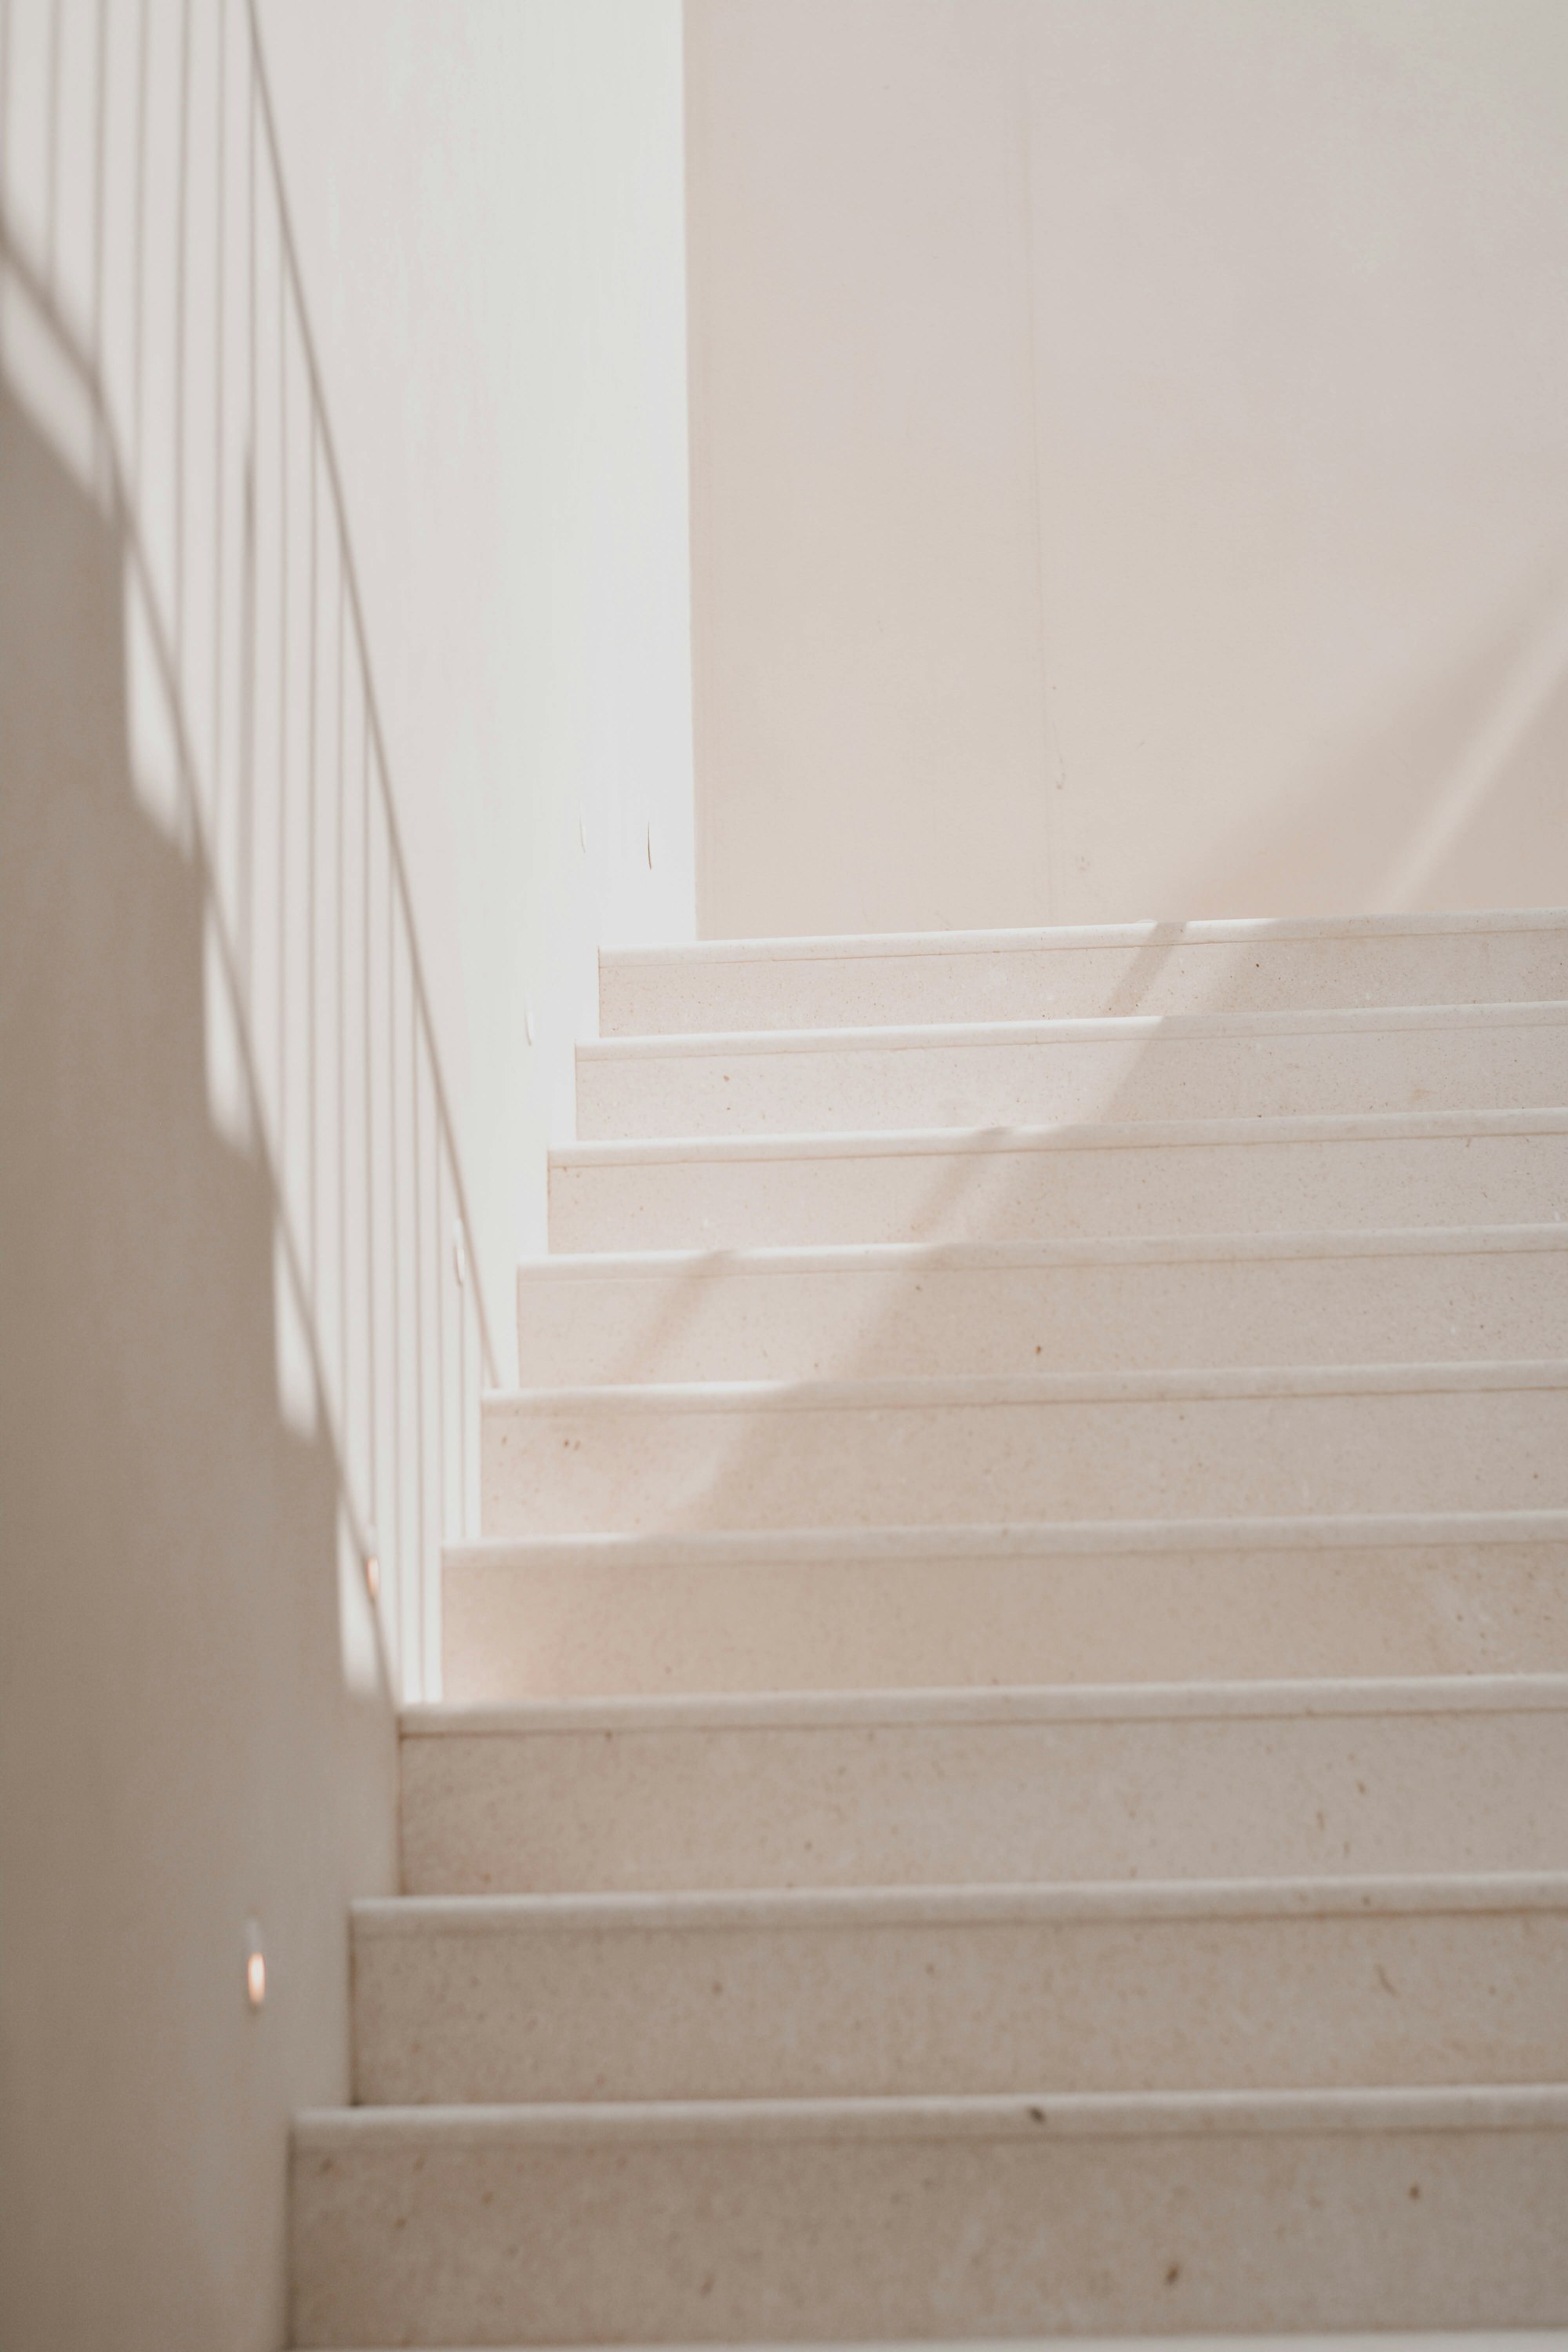 Light hitting a set of minimalistic stairs